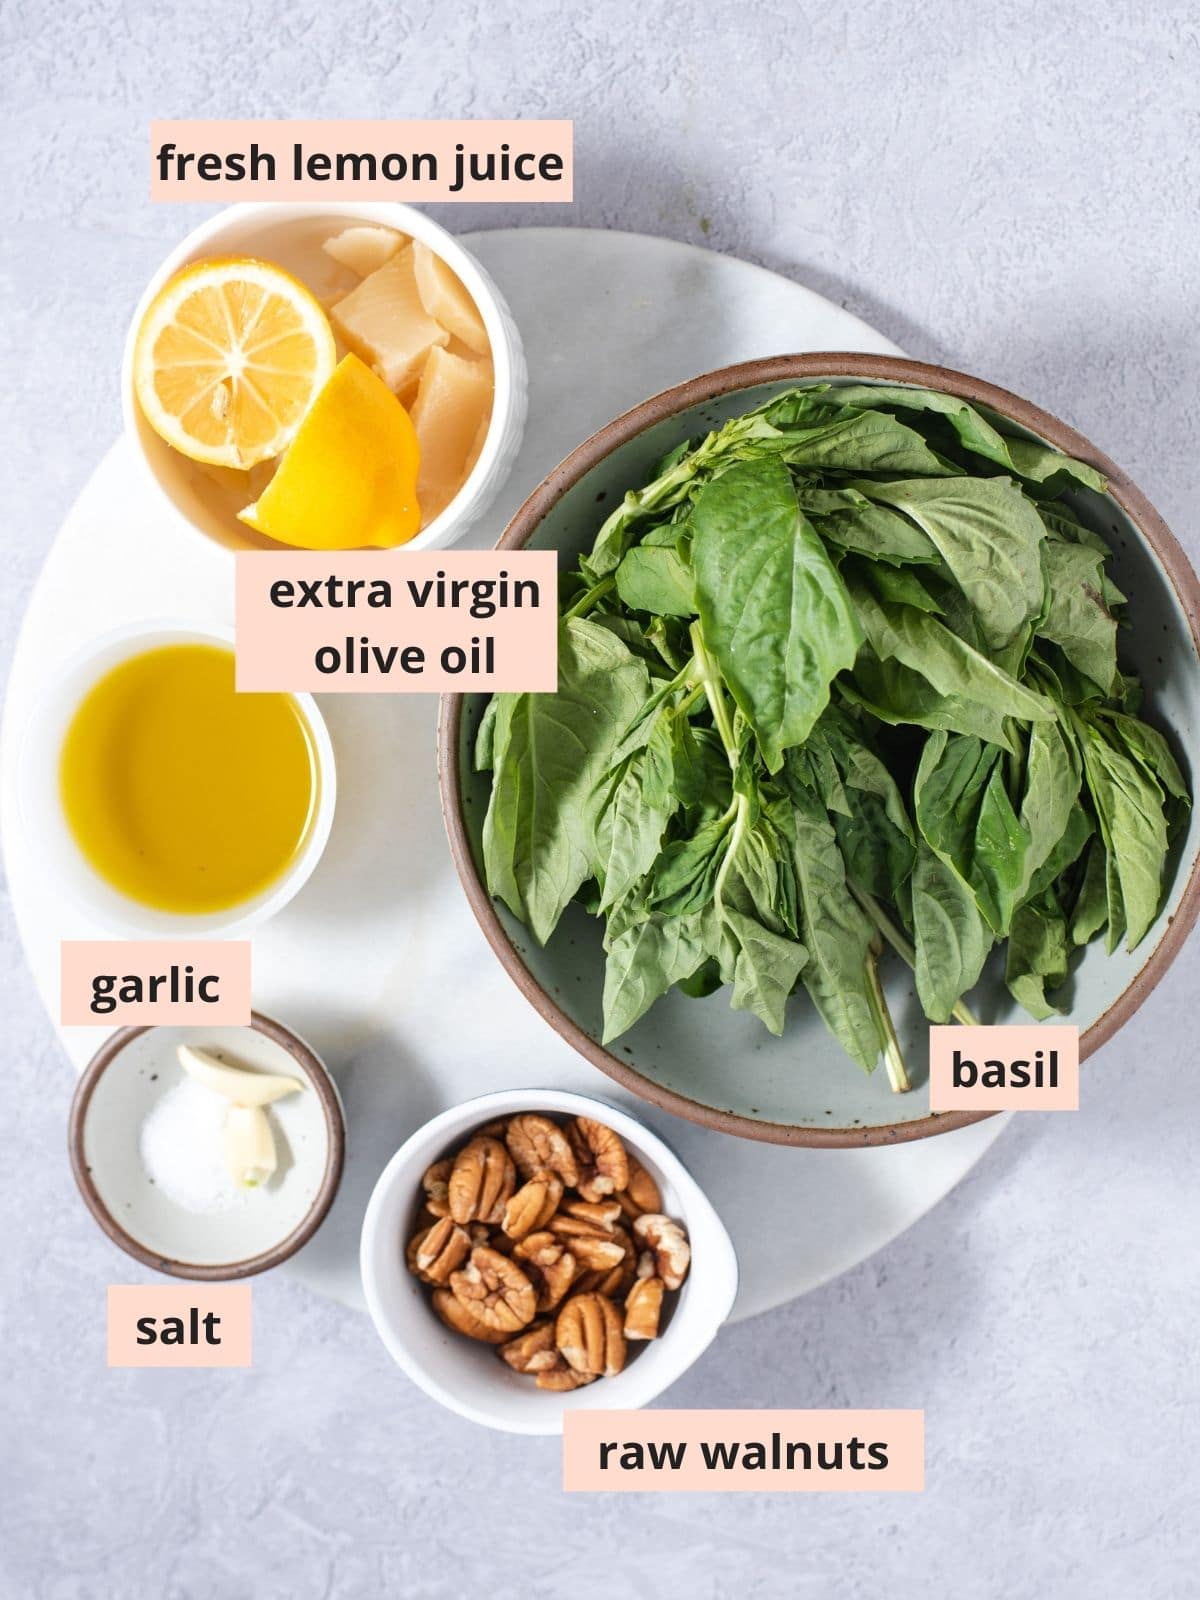 Labeled ingredients used to make pesto.